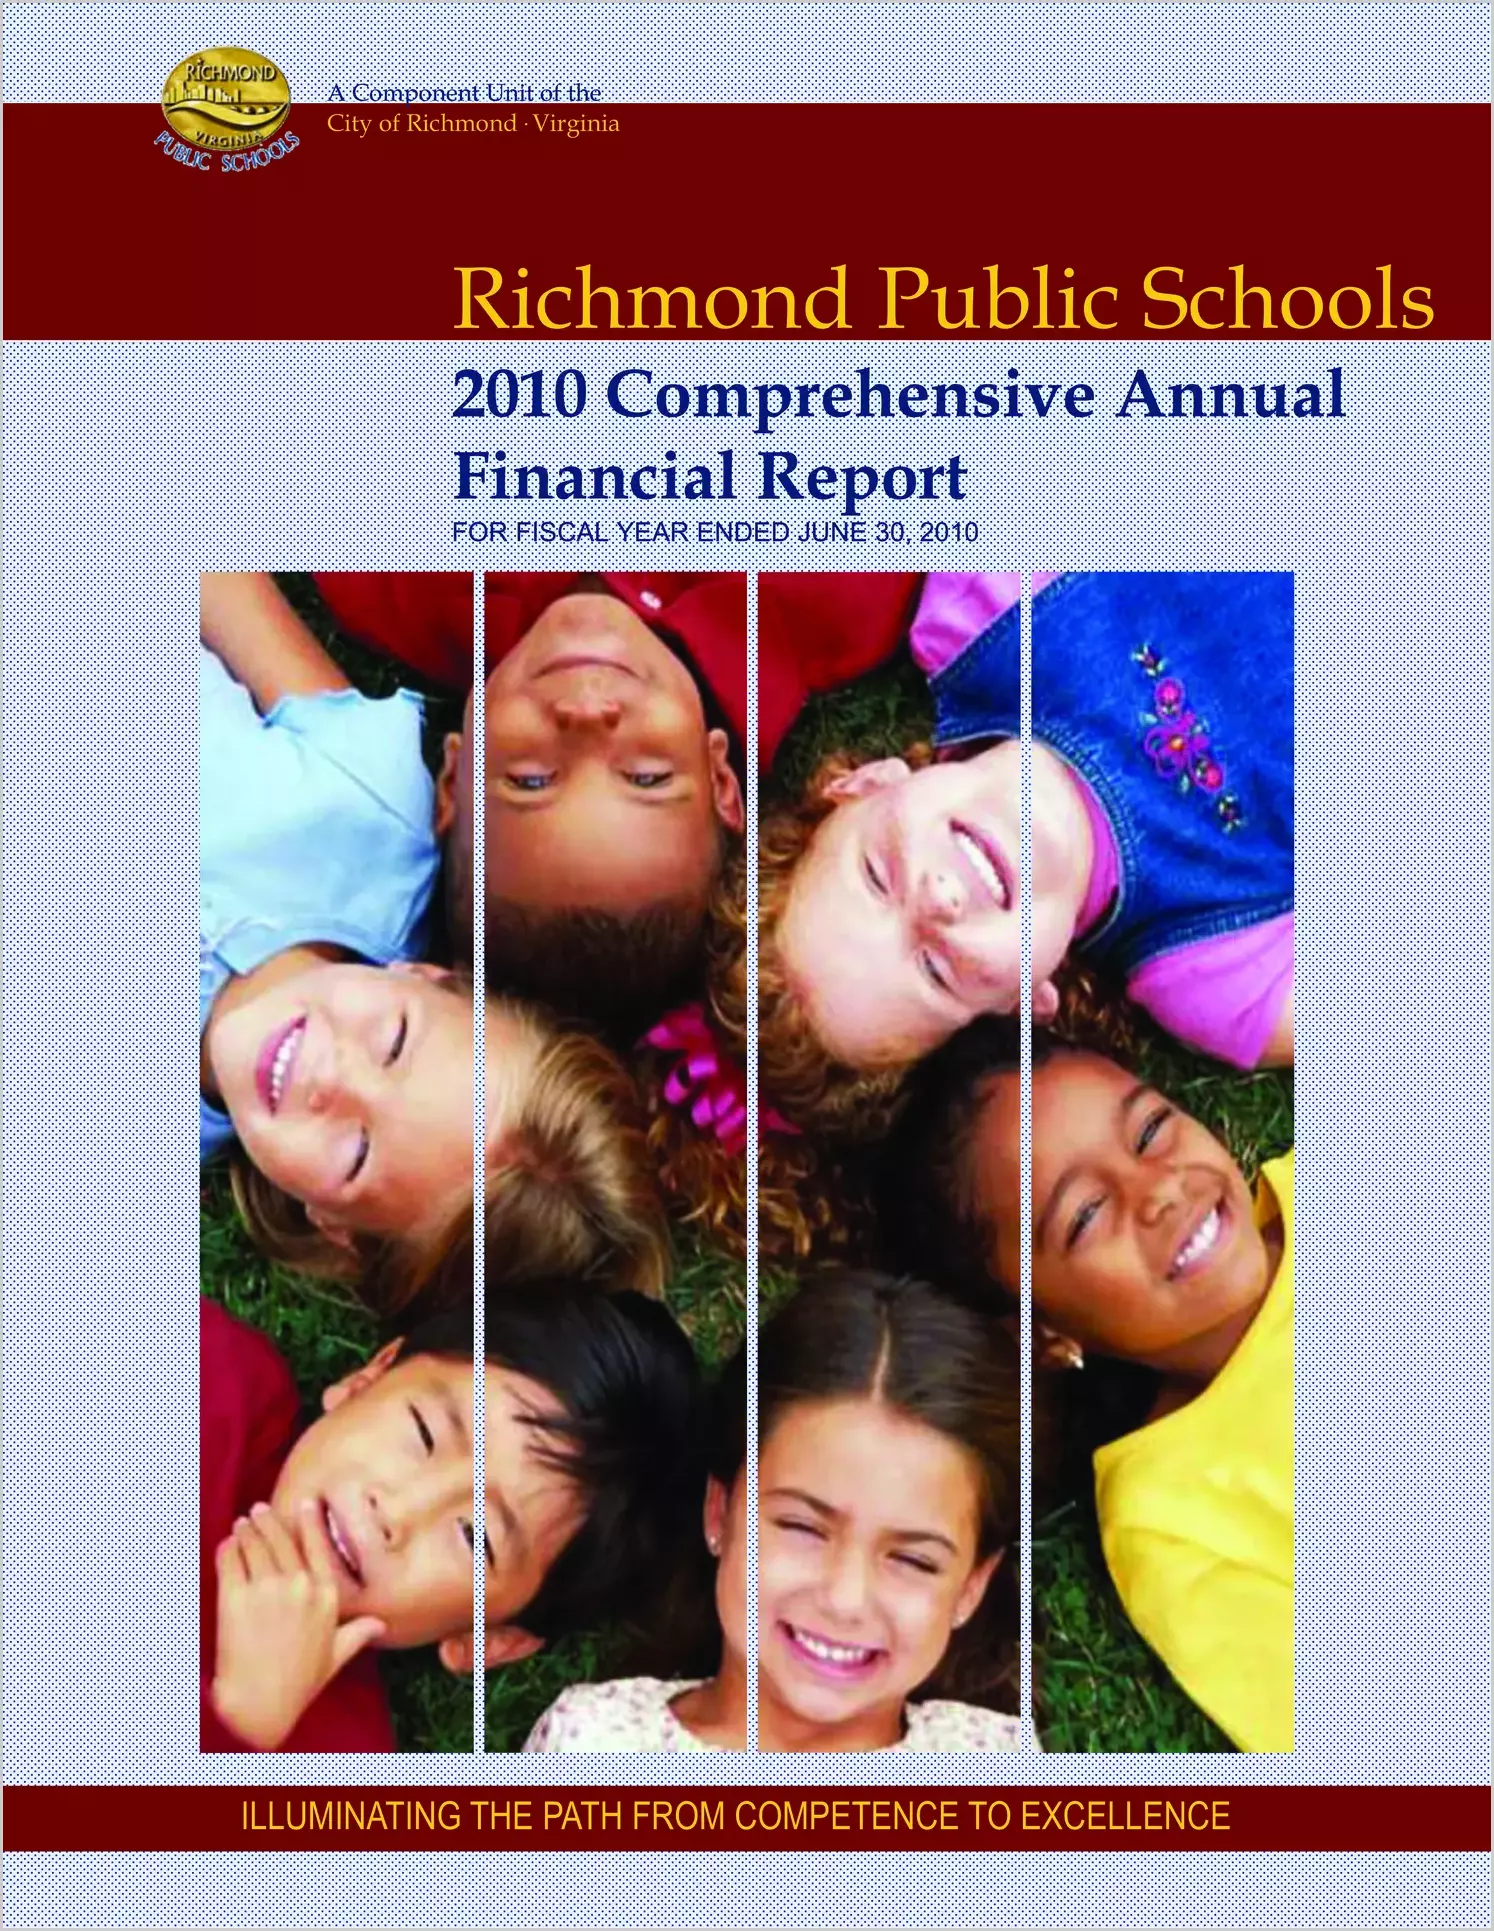 2010 Public Schools Annual Financial Report for City of Richmond